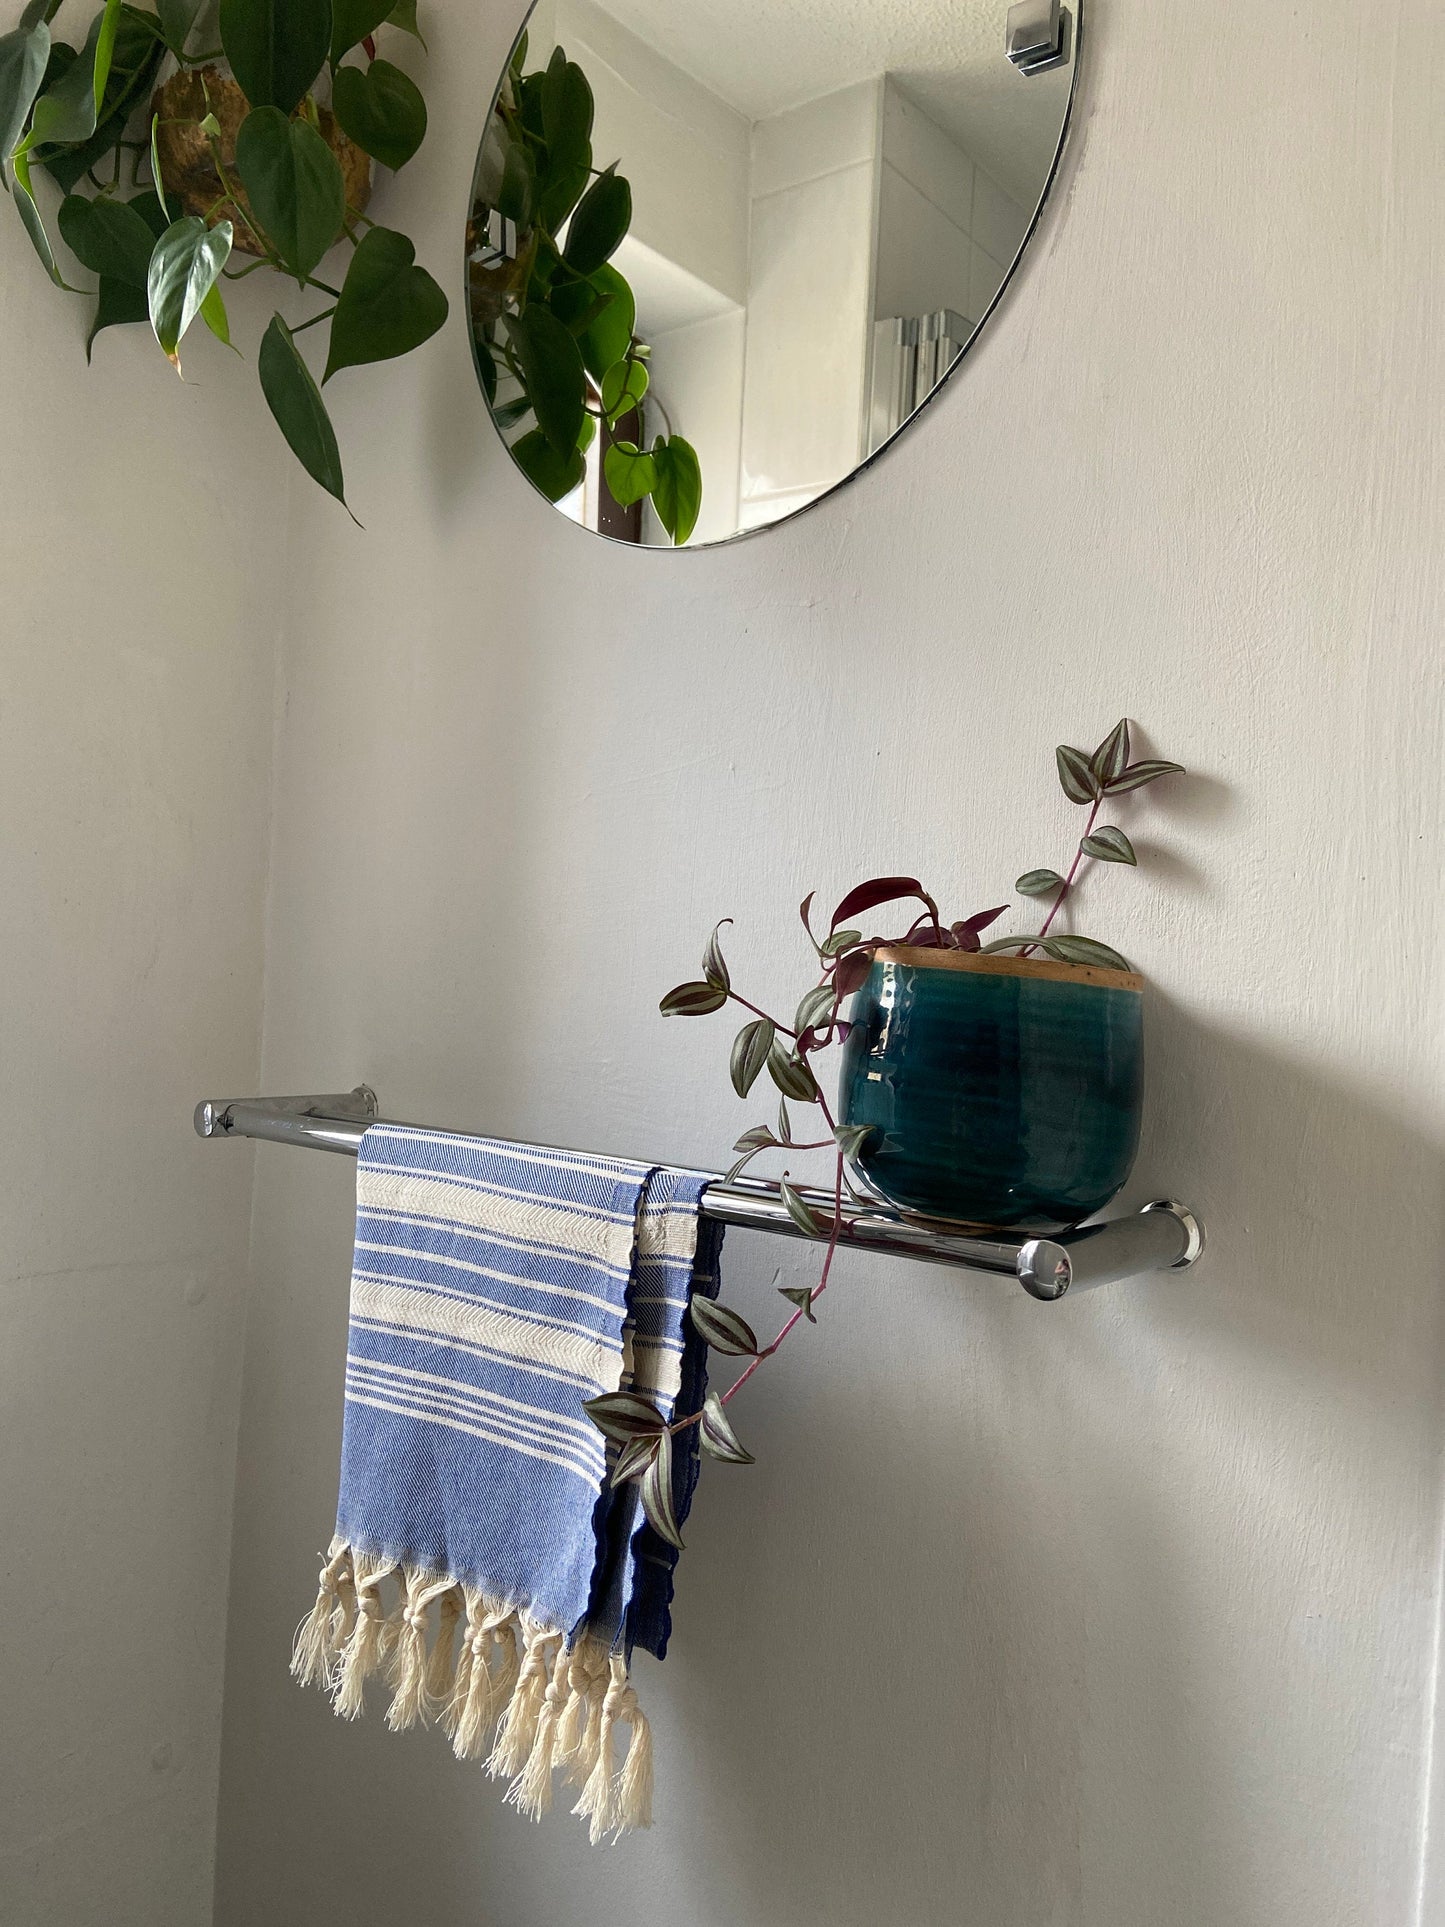 Striped Design Tea Towel - Blue Kitchen Towel - Bathroom Hand Towel - Cotton Towel